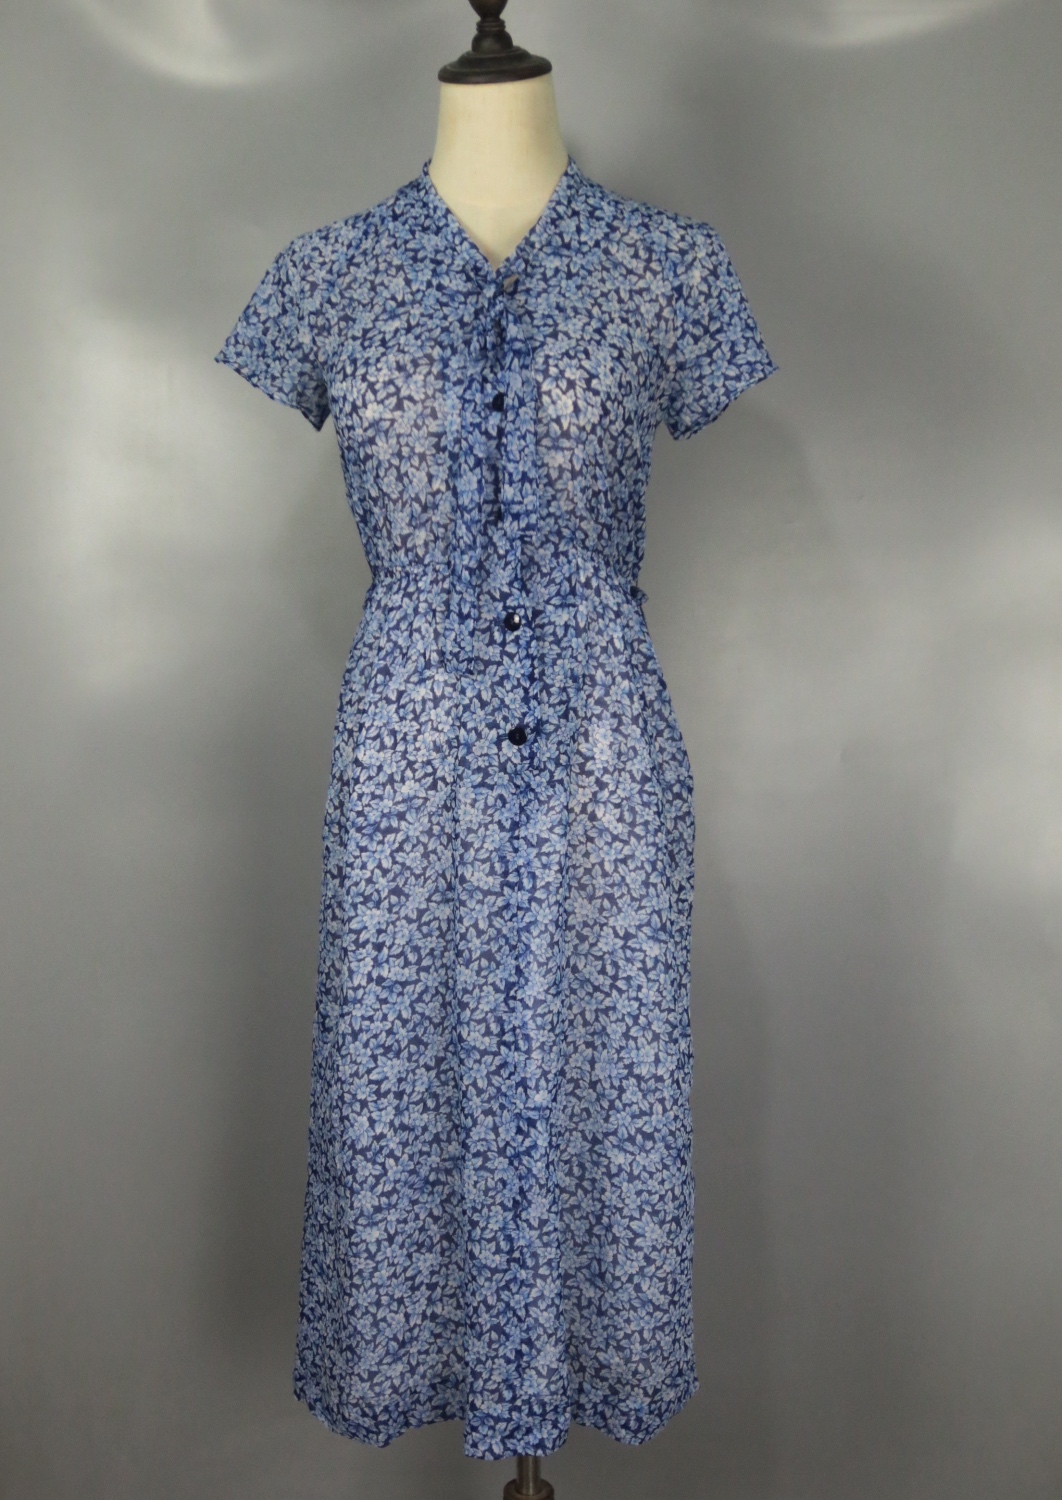 Vintage 古着正品90年代日本中古蓝色碎花系带淑女短袖雪纺连衣裙